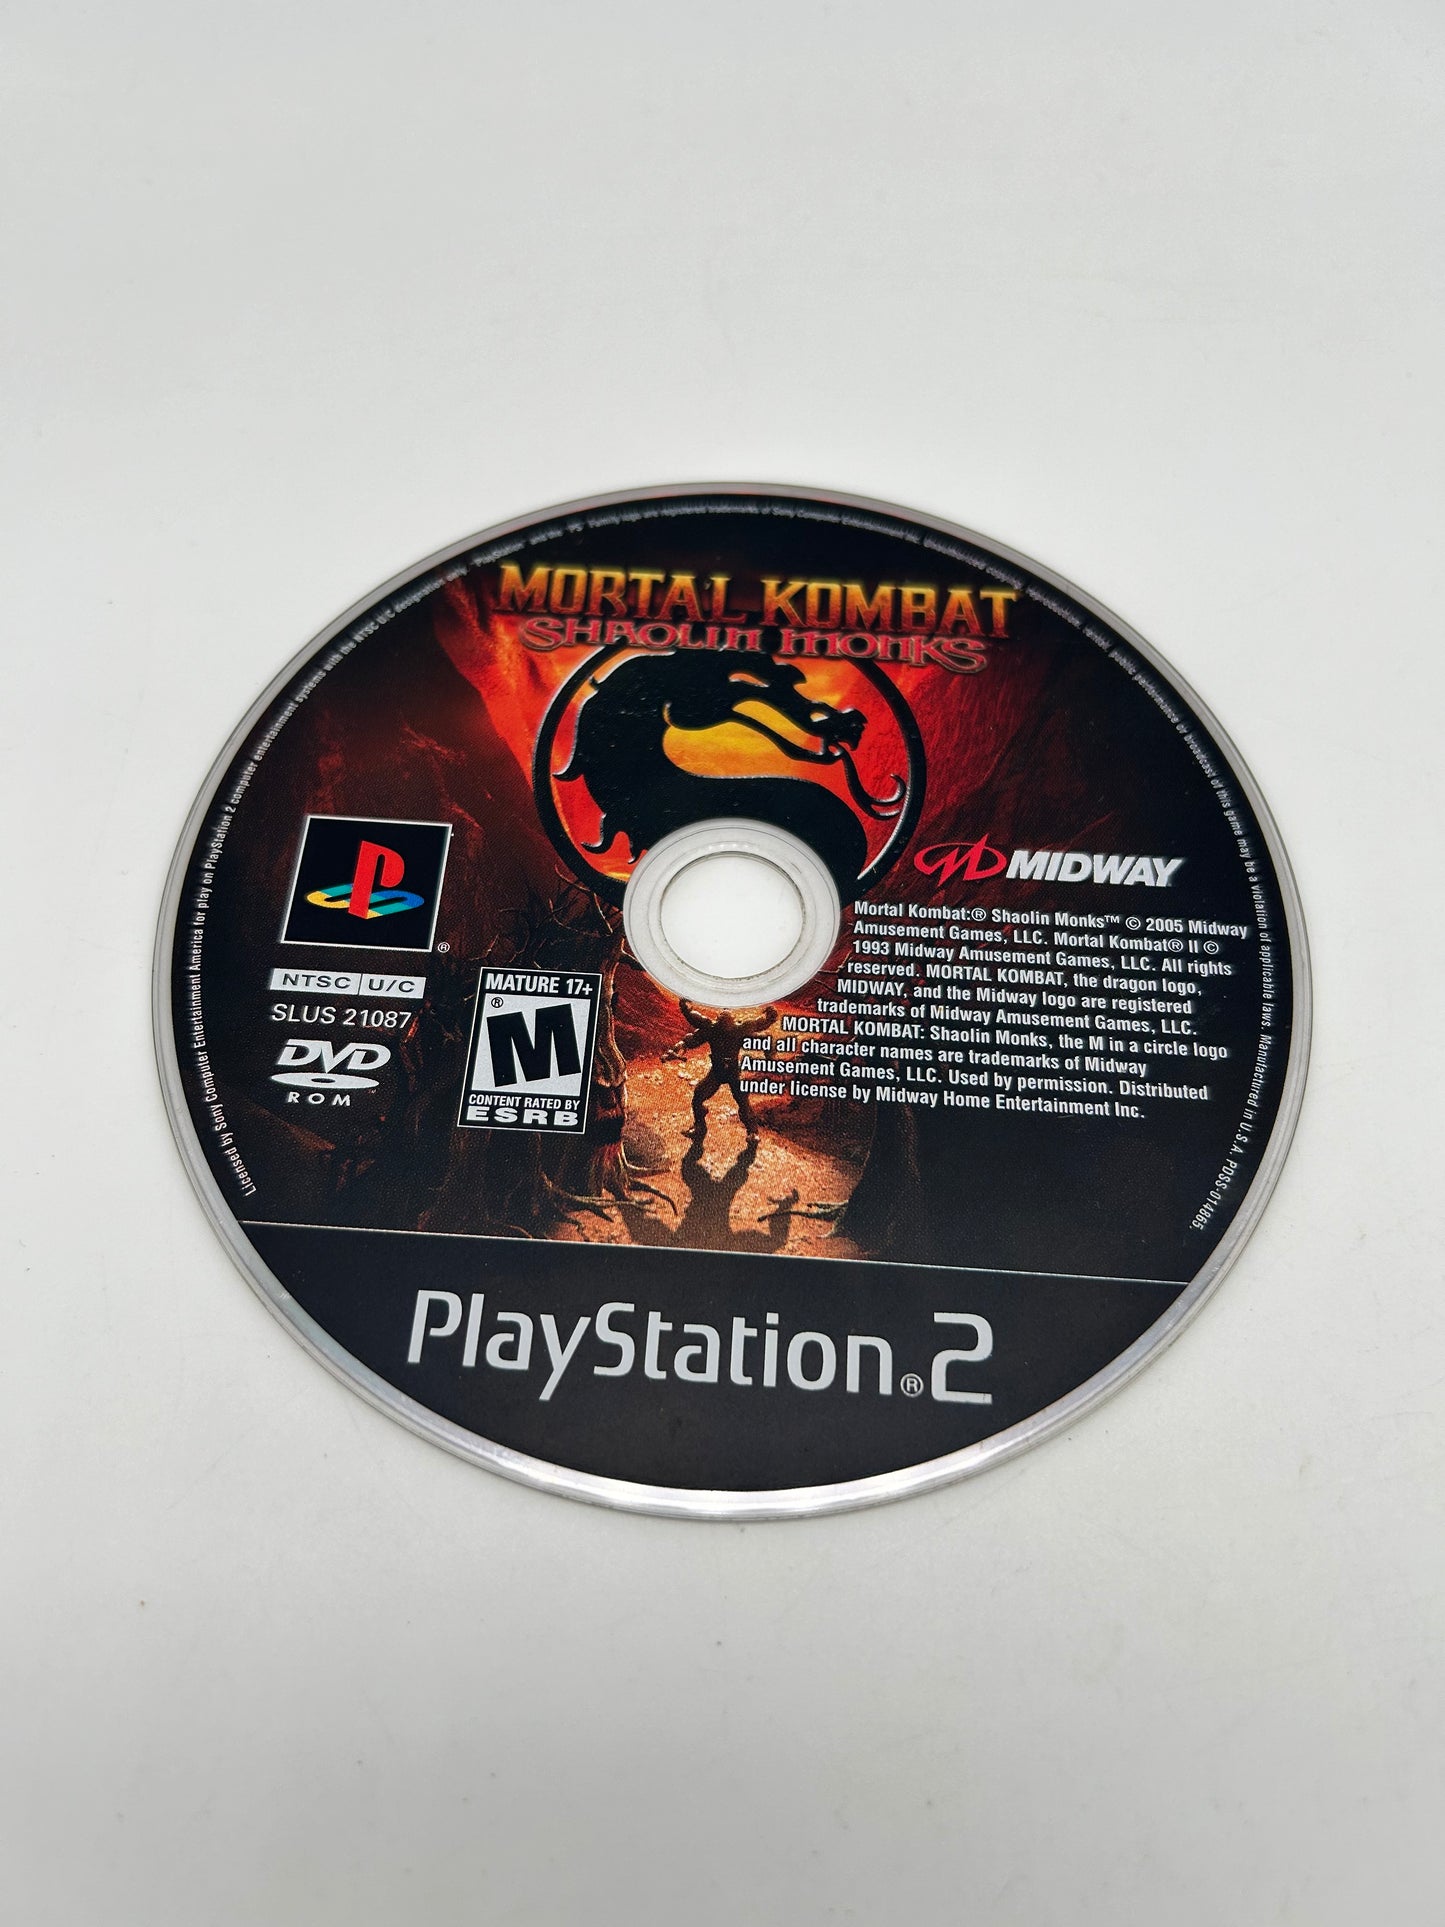 PiXEL-RETRO.COM : SONY PLAYSTATION 2 (PS2) GAME NTSC MORTAL KOMBAT SHAOLIN MONKS